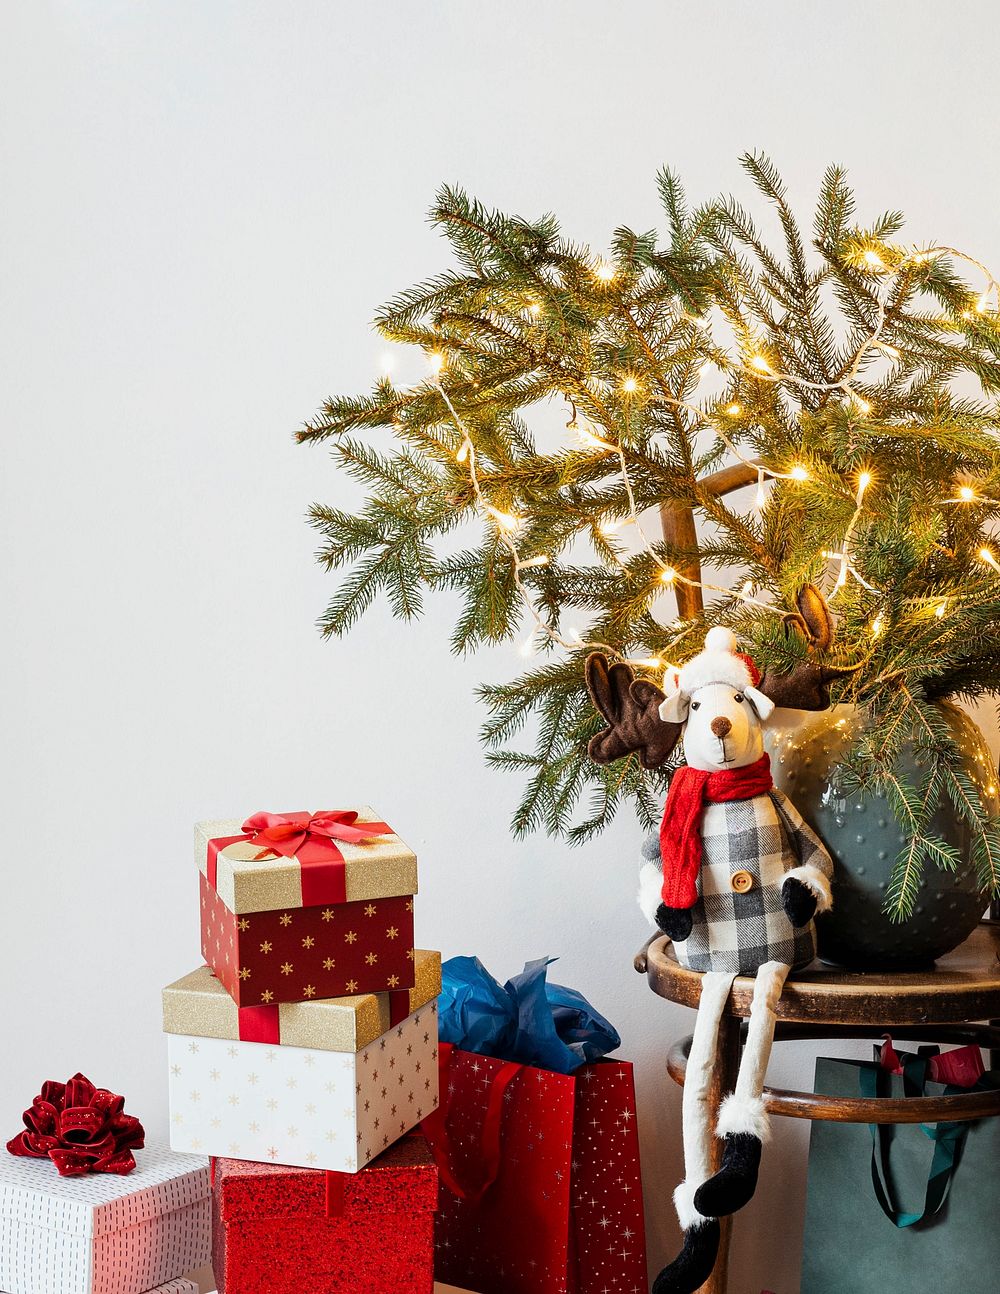 Festive presents under a minimal Christmas tree flyer background 